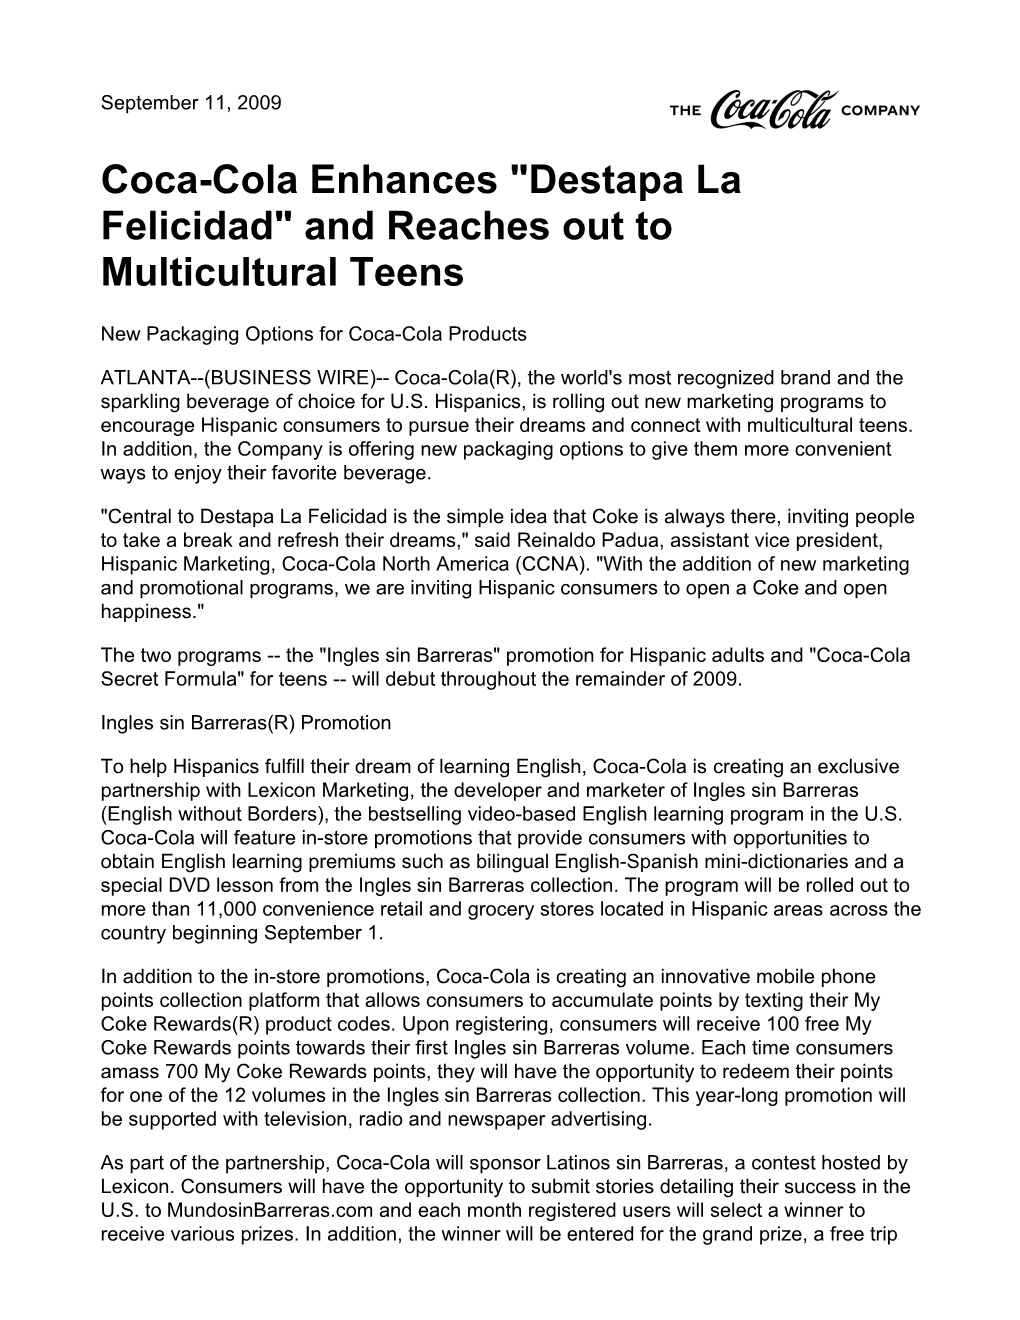 Coca-Cola Enhances "Destapa La Felicidad" and Reaches out to Multicultural Teens